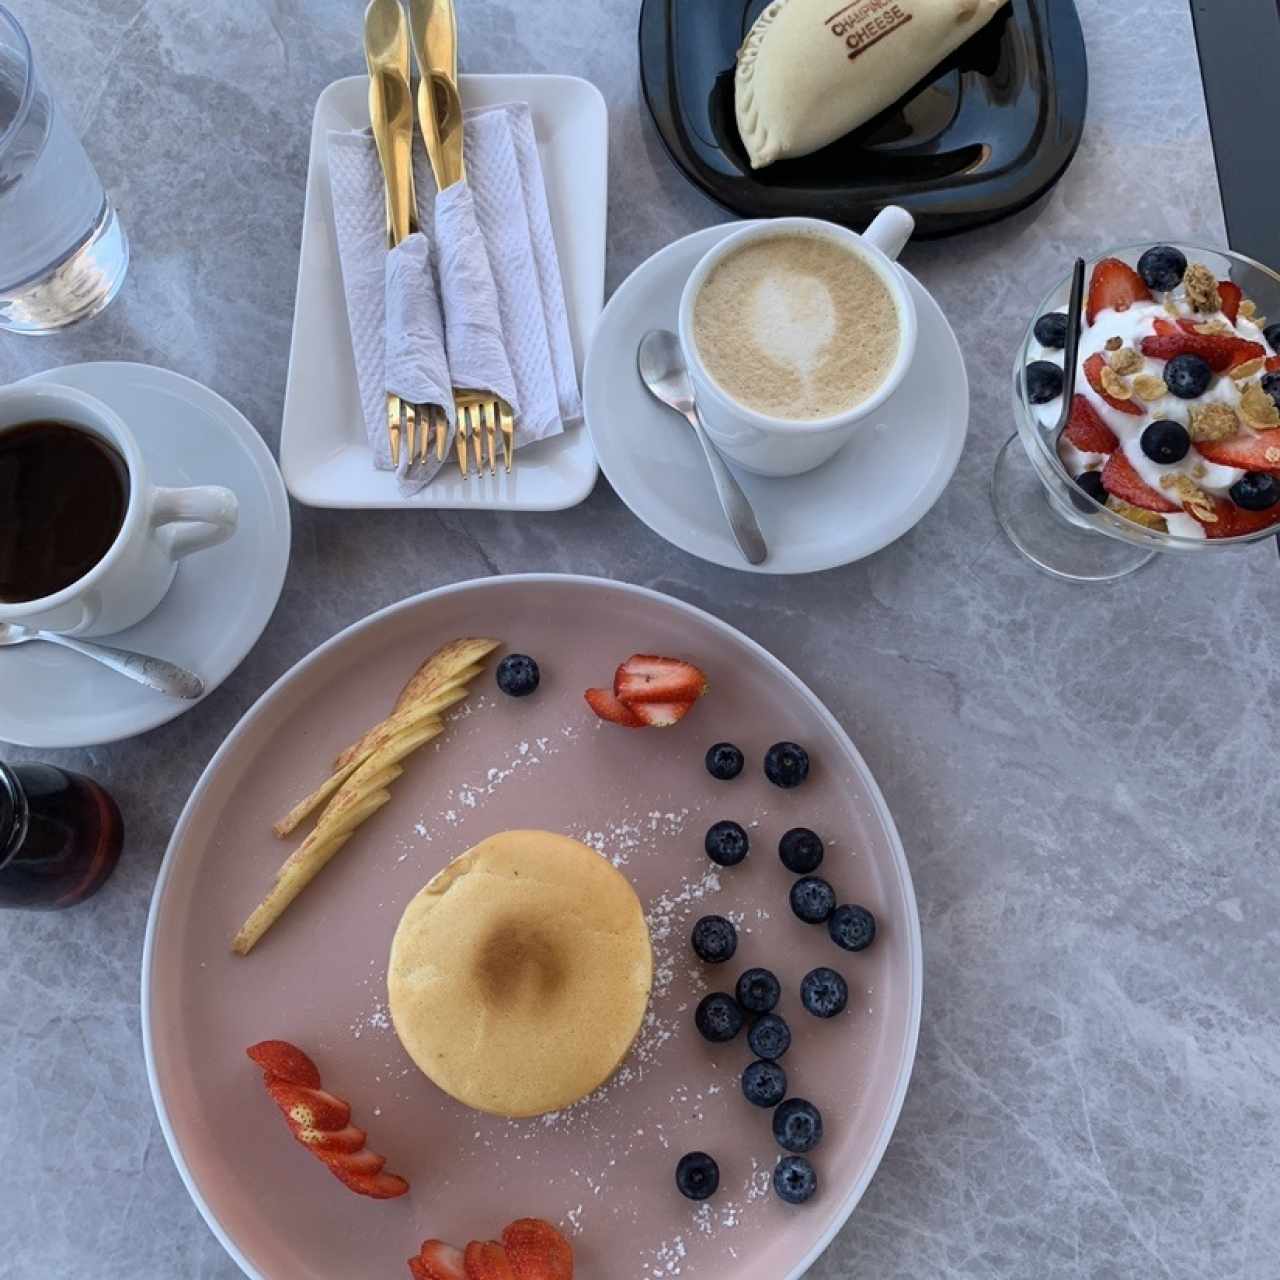 Parfait + Pancakes + Café americano + Capuchino + empanada chilena